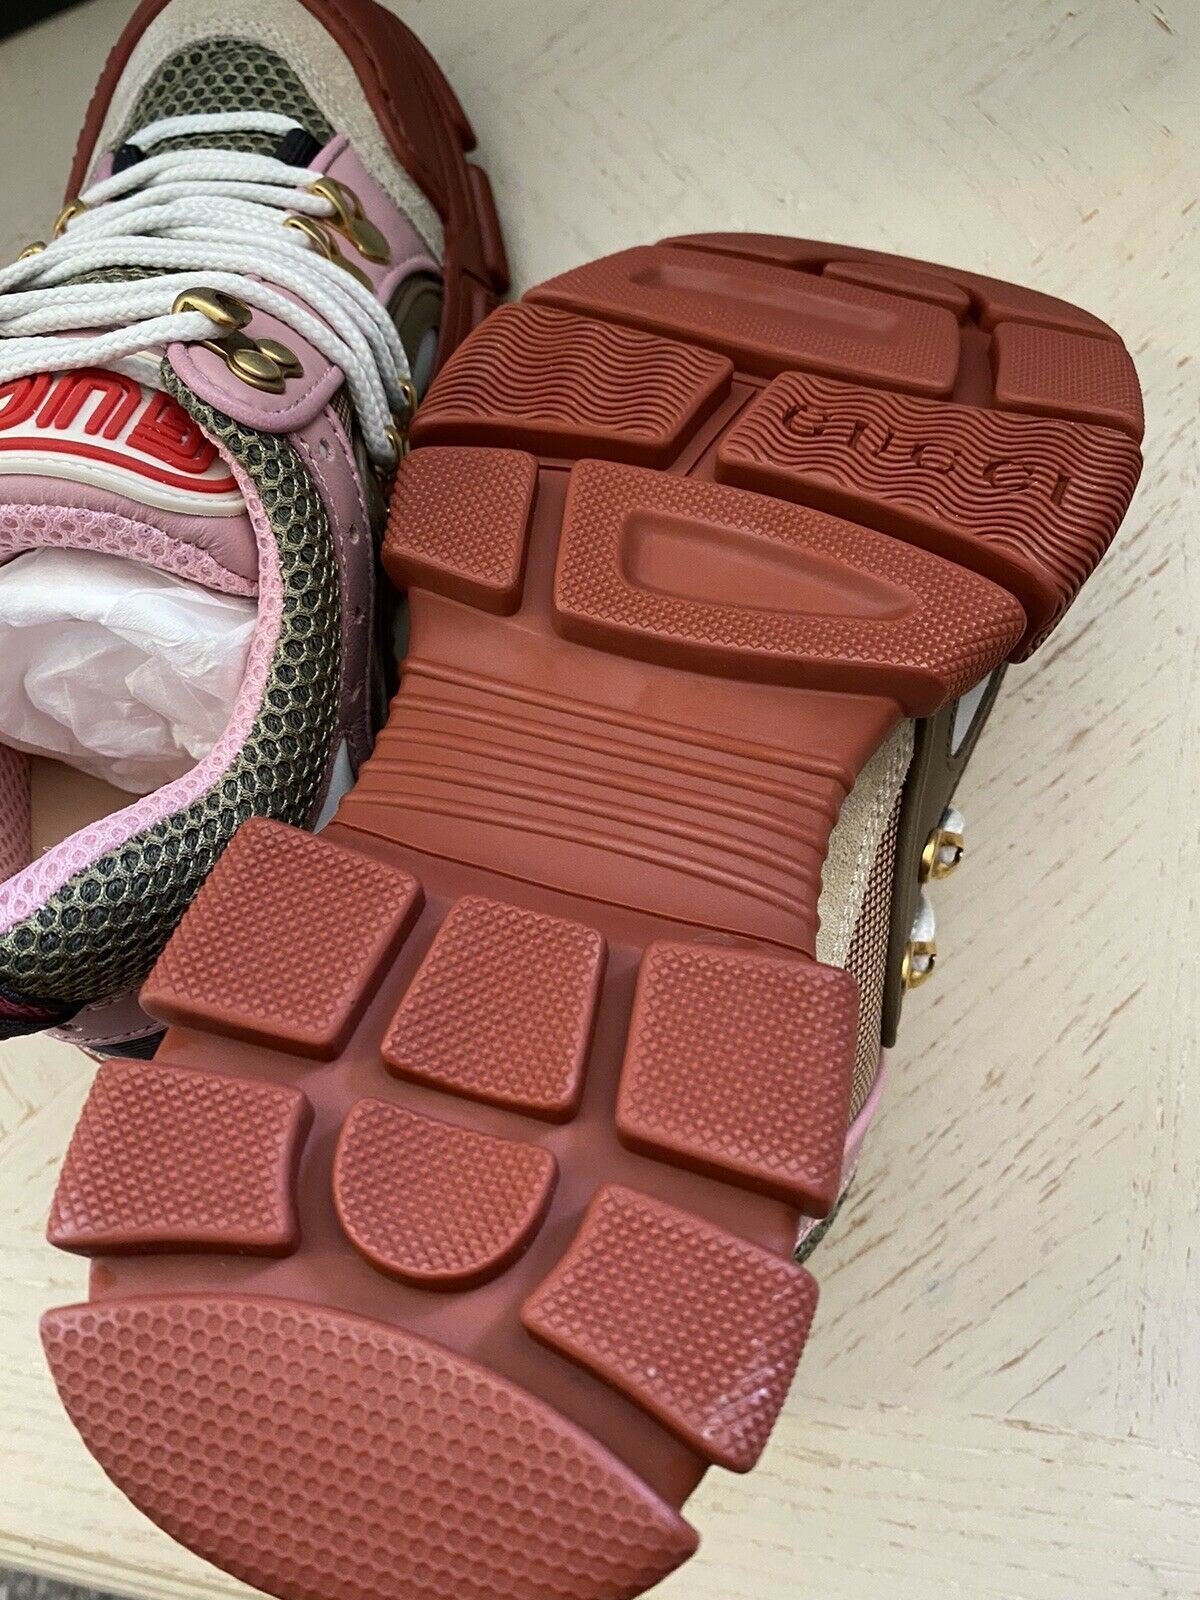 NIB $1300 Gucci Women’s Sneakers Shoes Military Green/Red/Pink 4.5 US/34.5 Eu